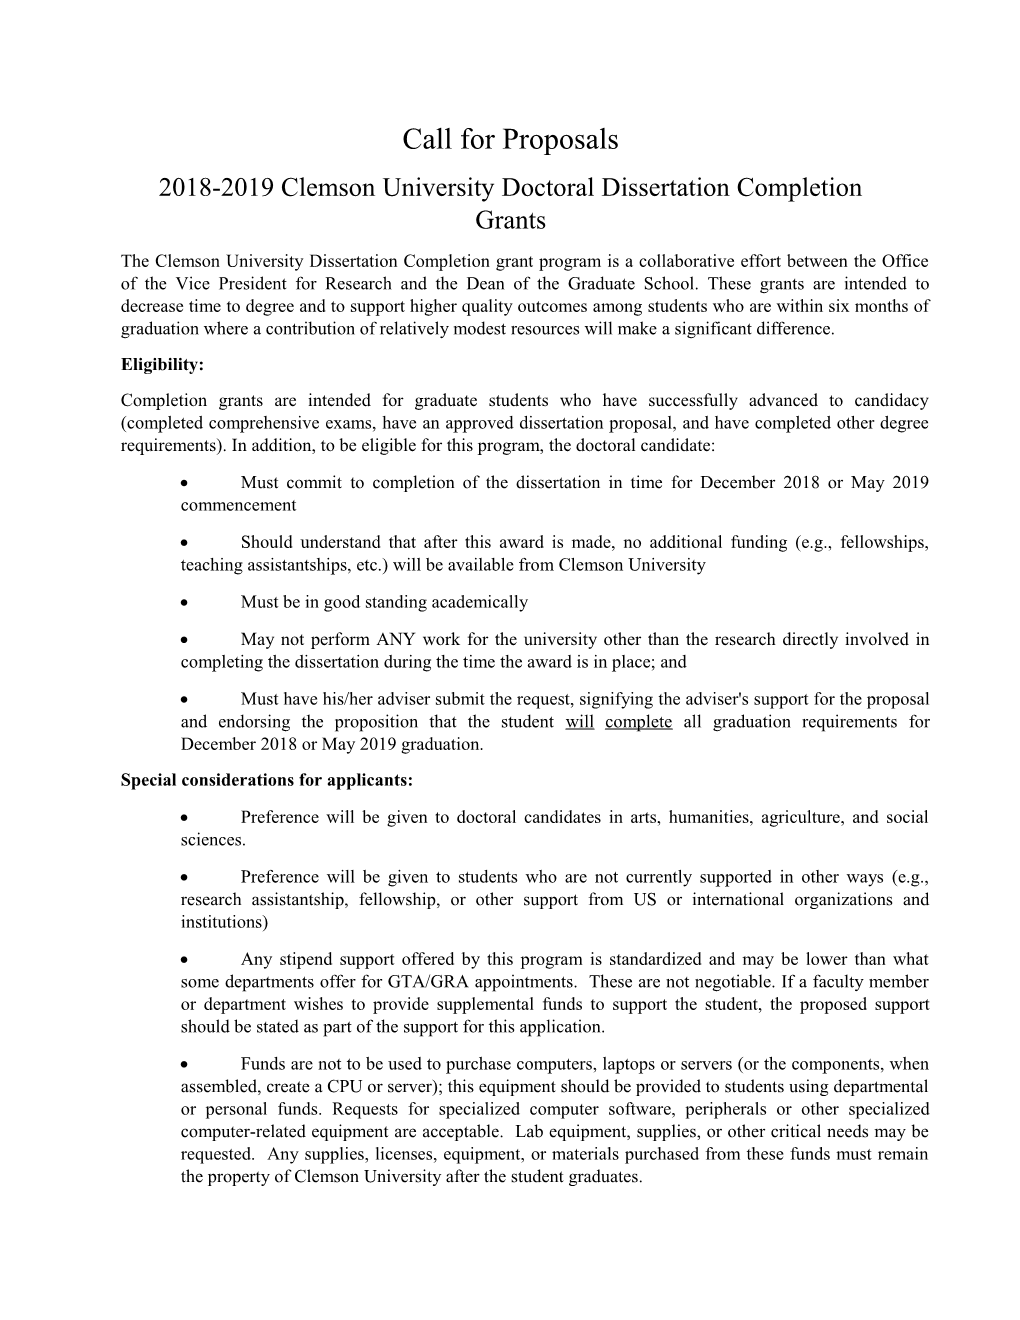 2018-2019 Clemson University Doctoral Dissertation Completion Grants